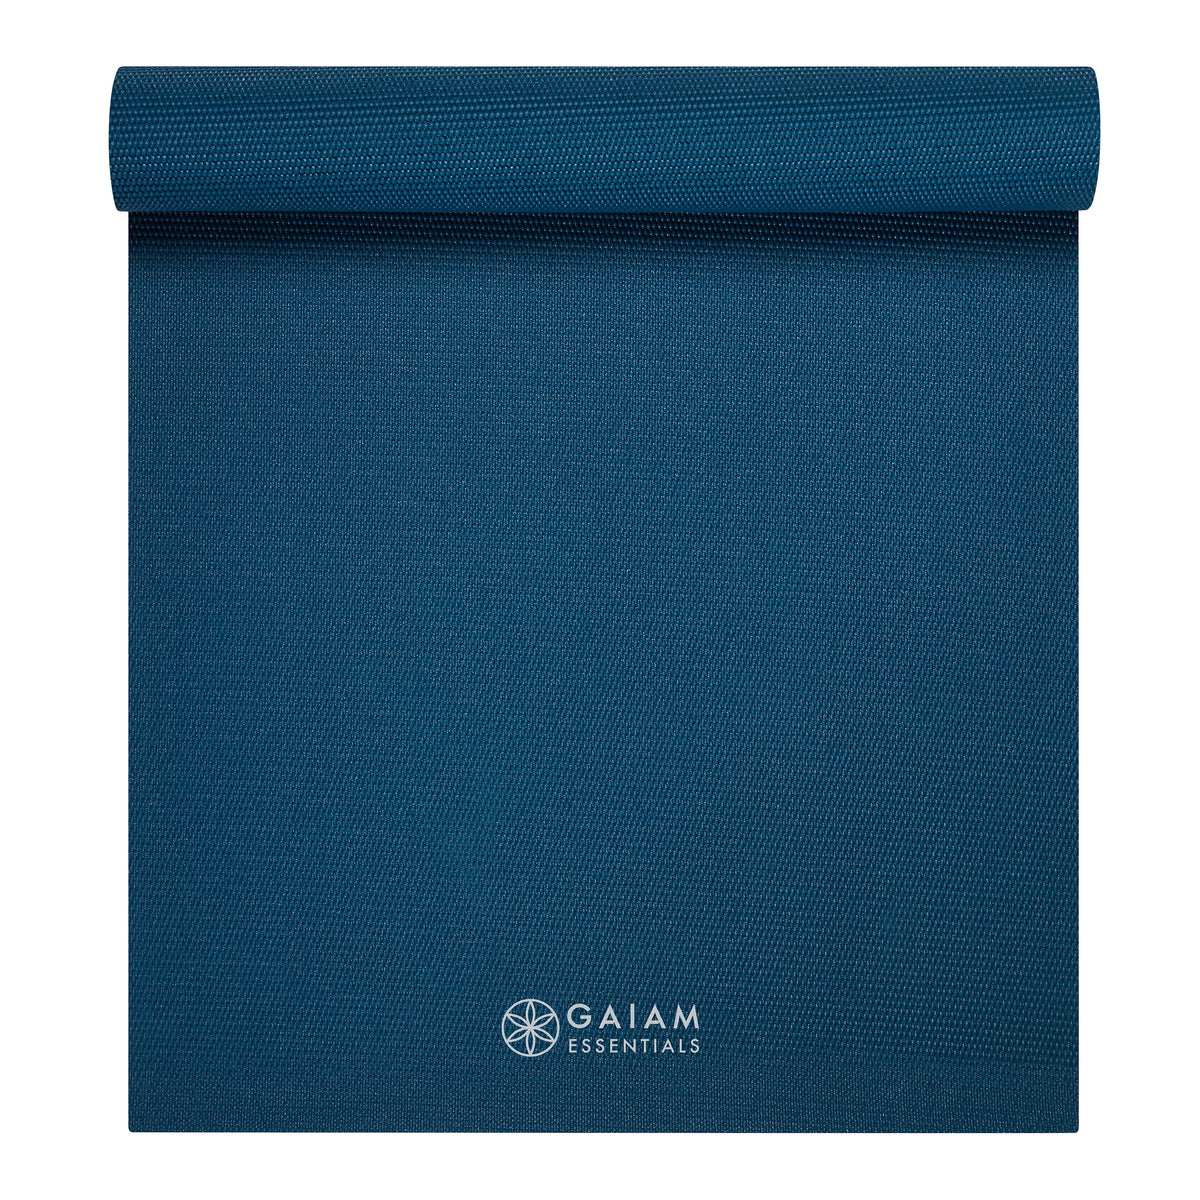 Gaiam Essentials Yoga Mat Navy top rolled